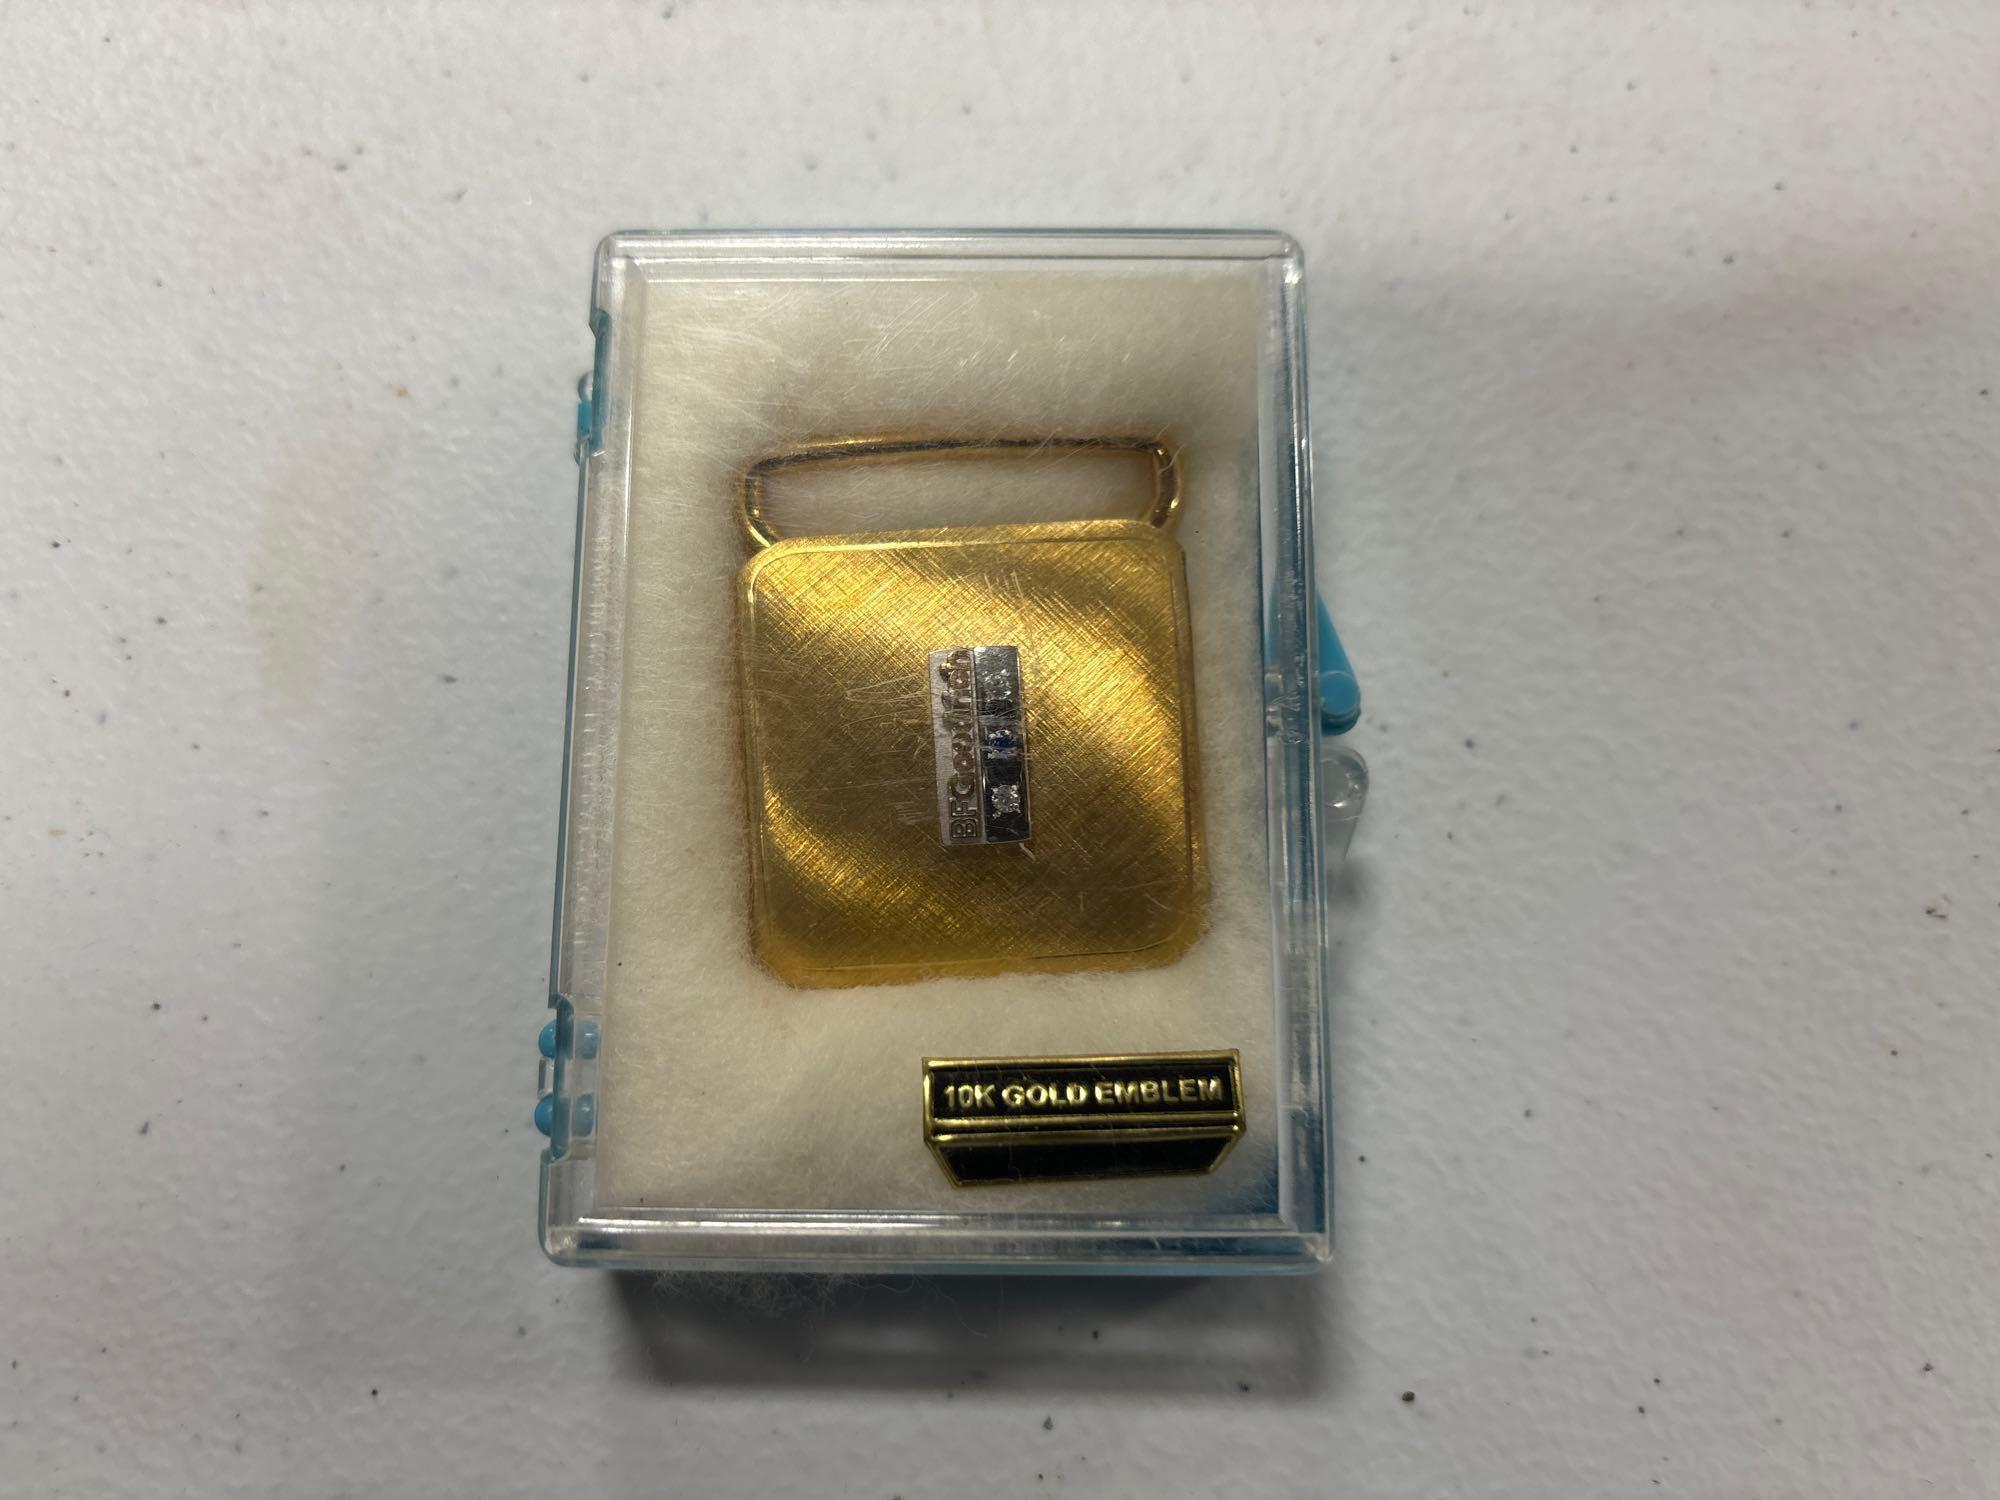 Pins - Federal Line and Stone Lighter - 10k Gold Emblem